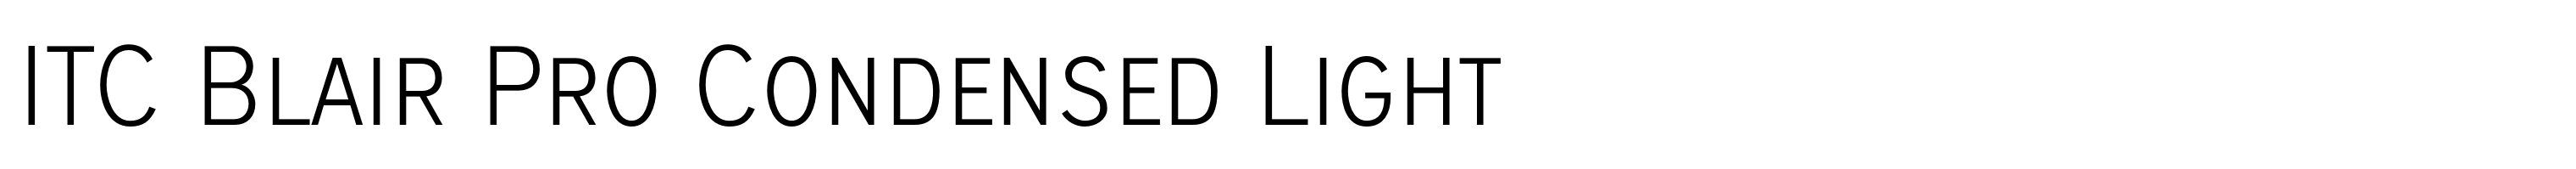 ITC Blair Pro Condensed Light